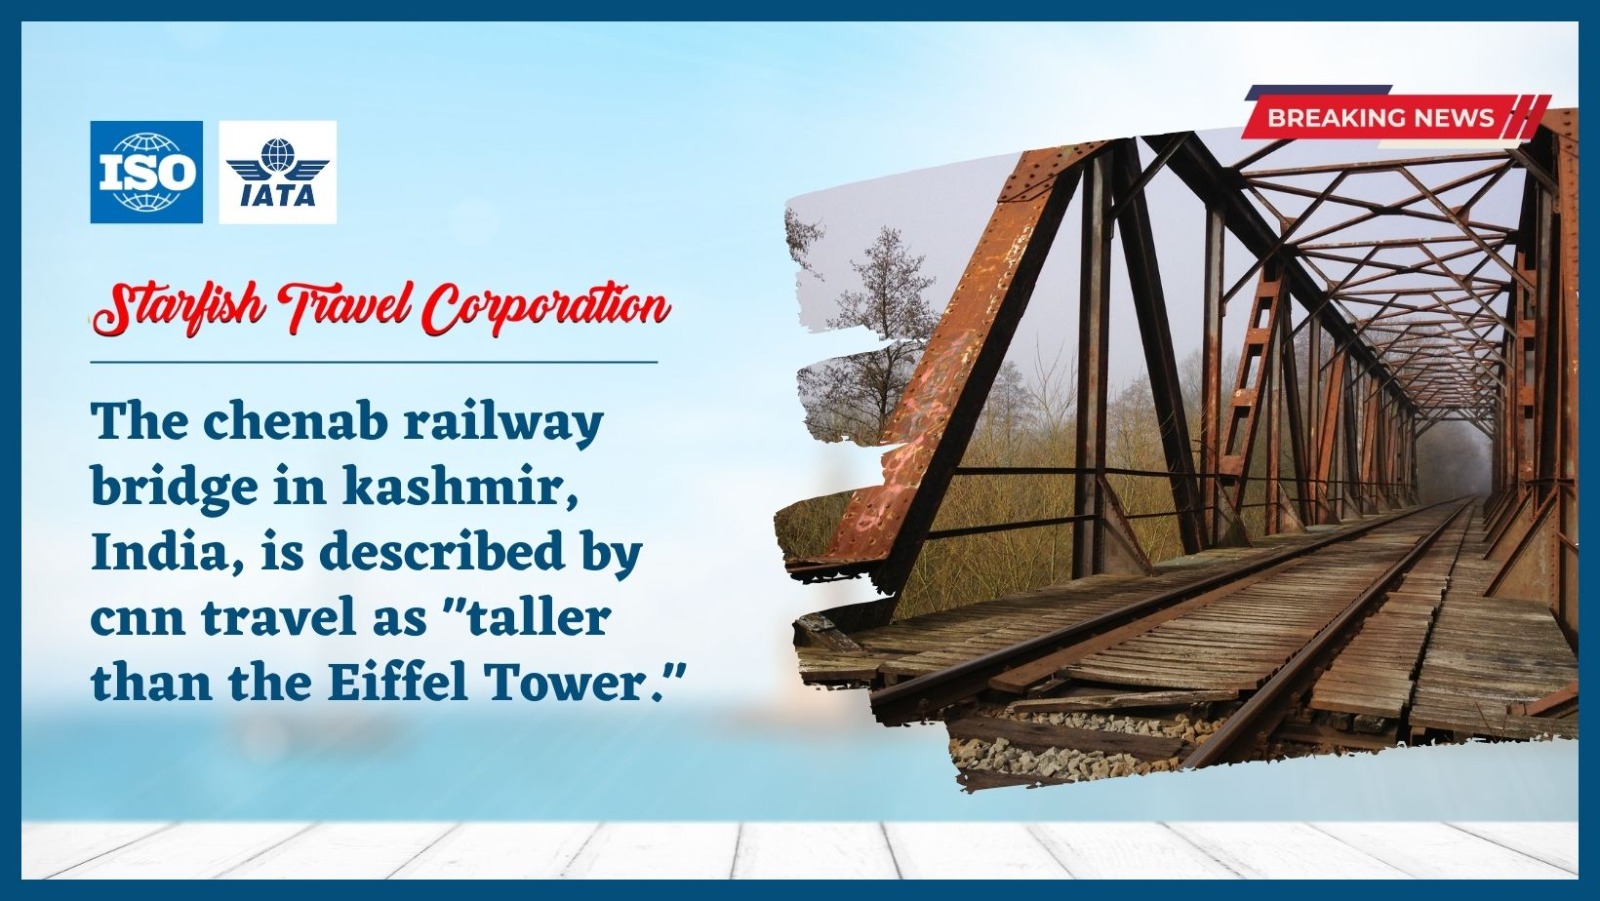 The chenab railway bridge in kashmir, India, is described by cnn travel as taller than the Eiffel Tower.